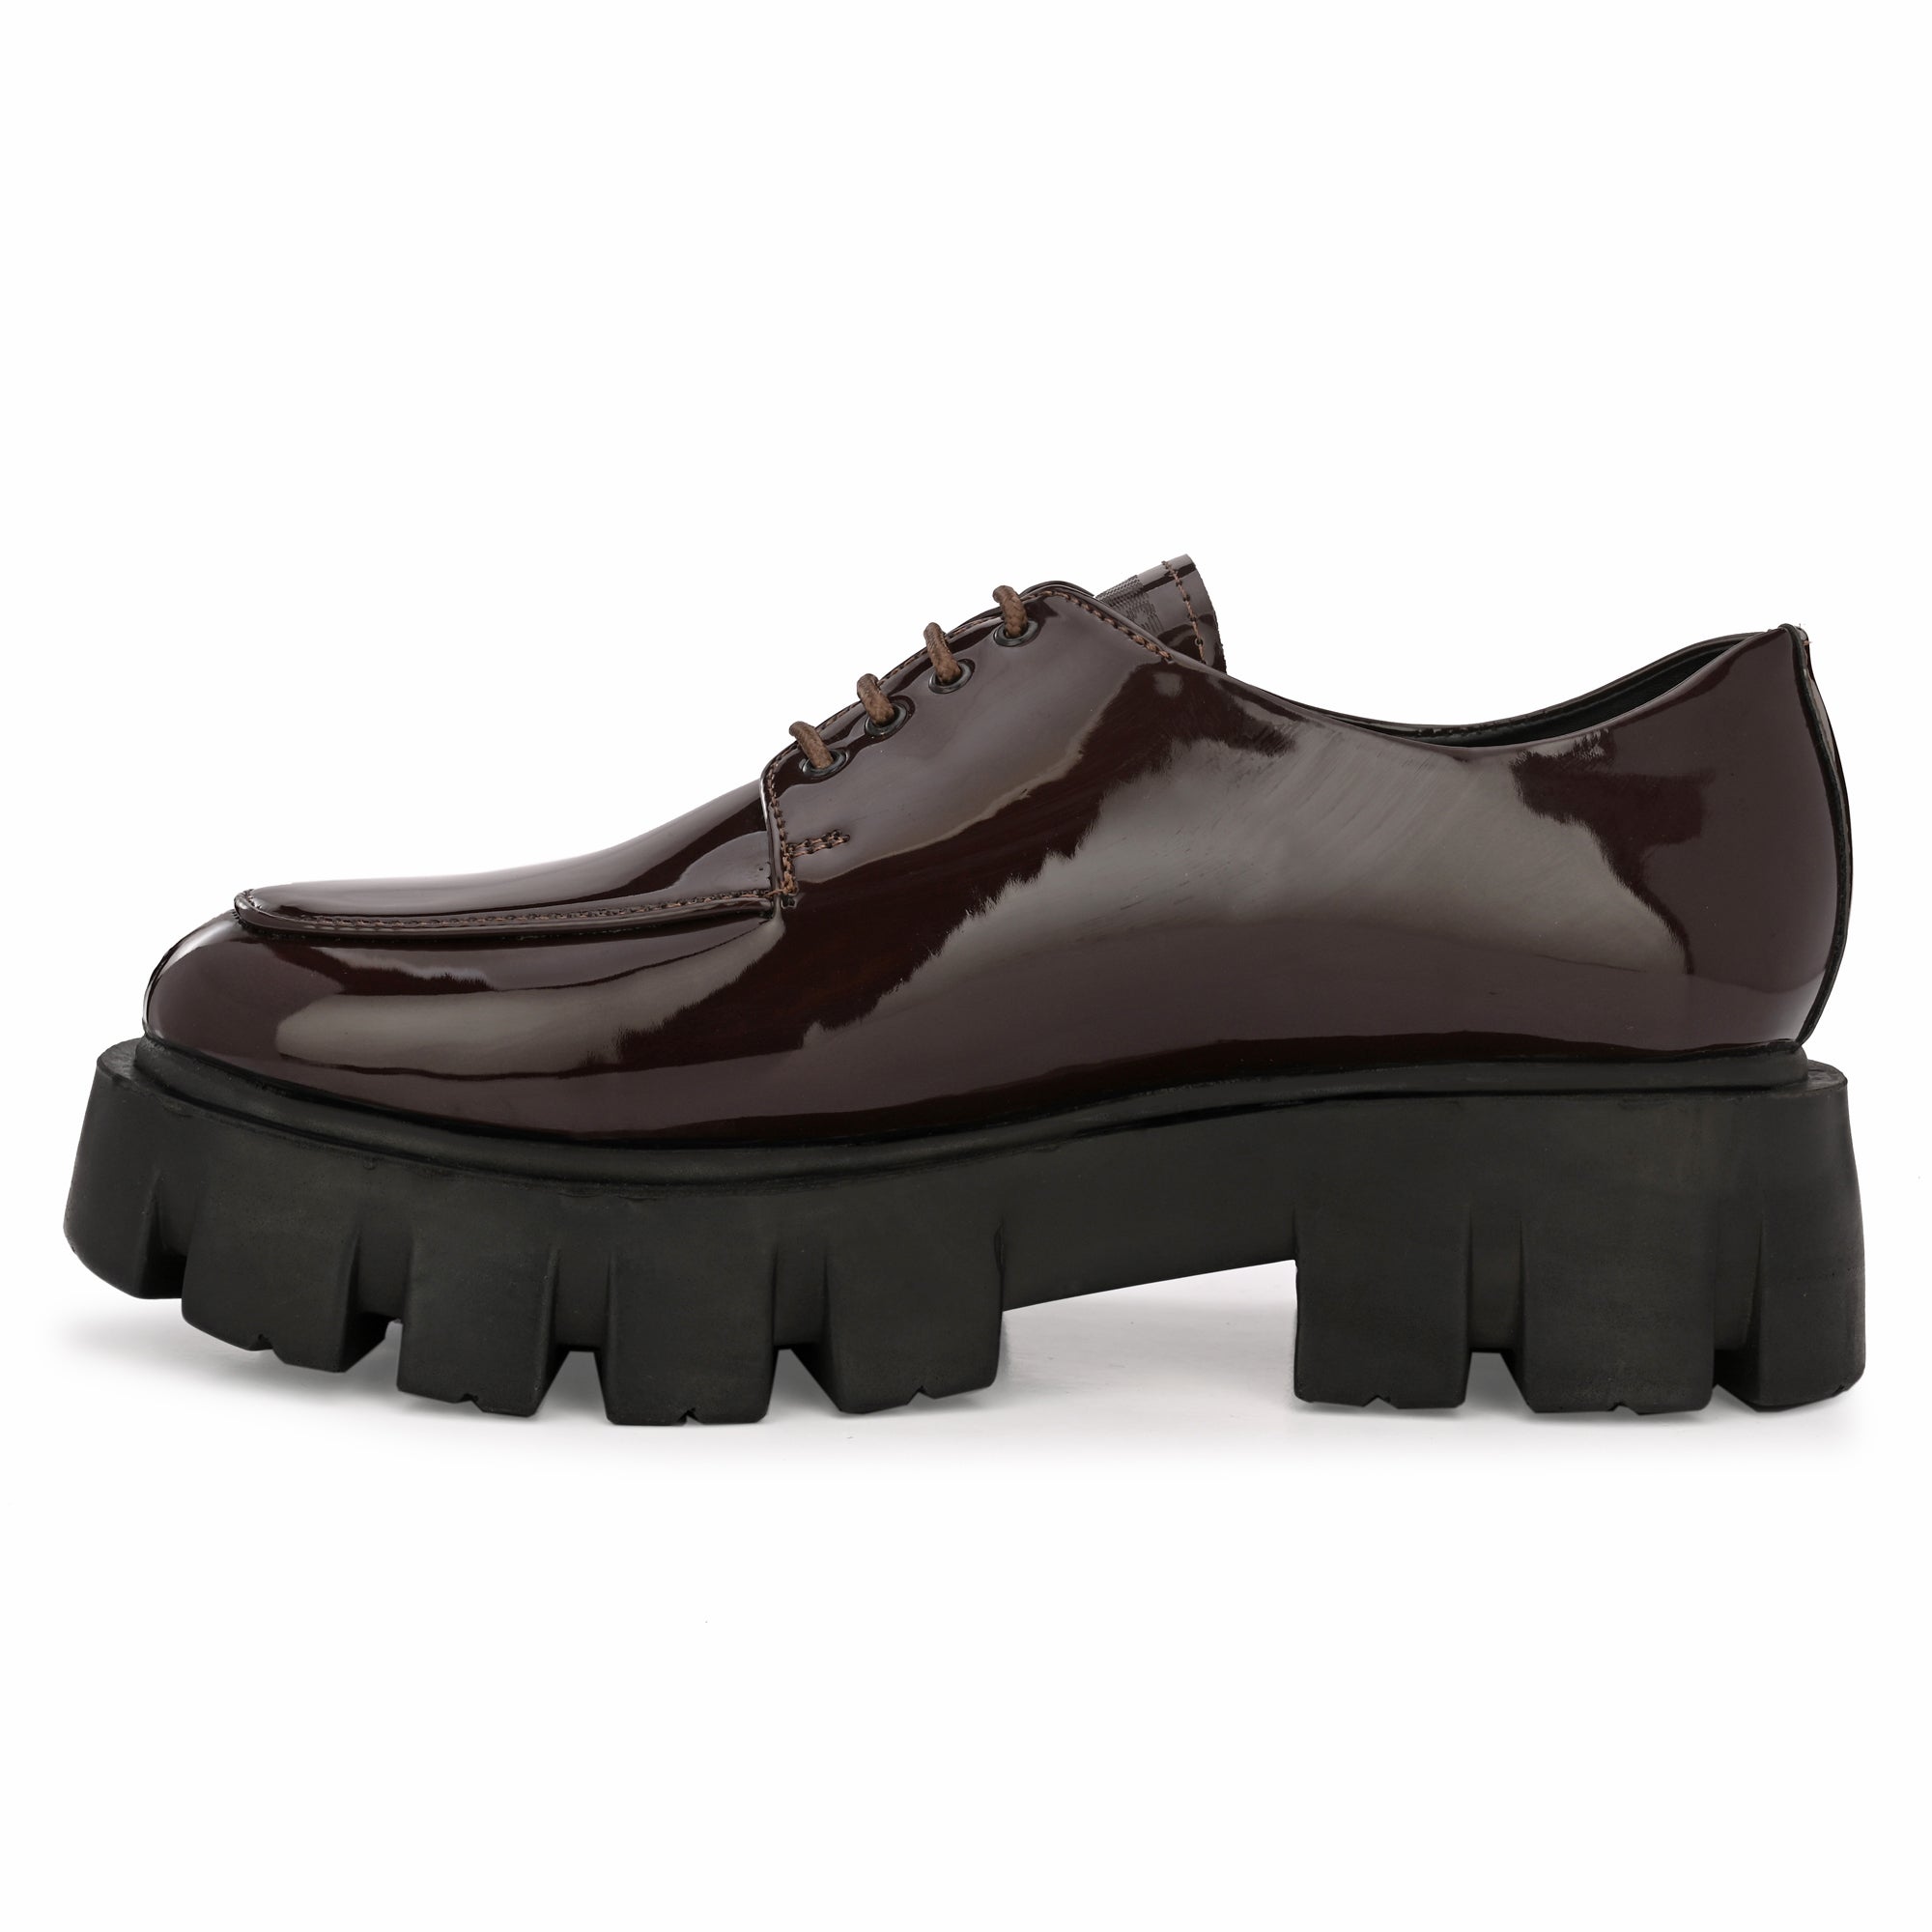 attitudist-glossy-coffee-brown-high-heel-derby-shoes-for-men